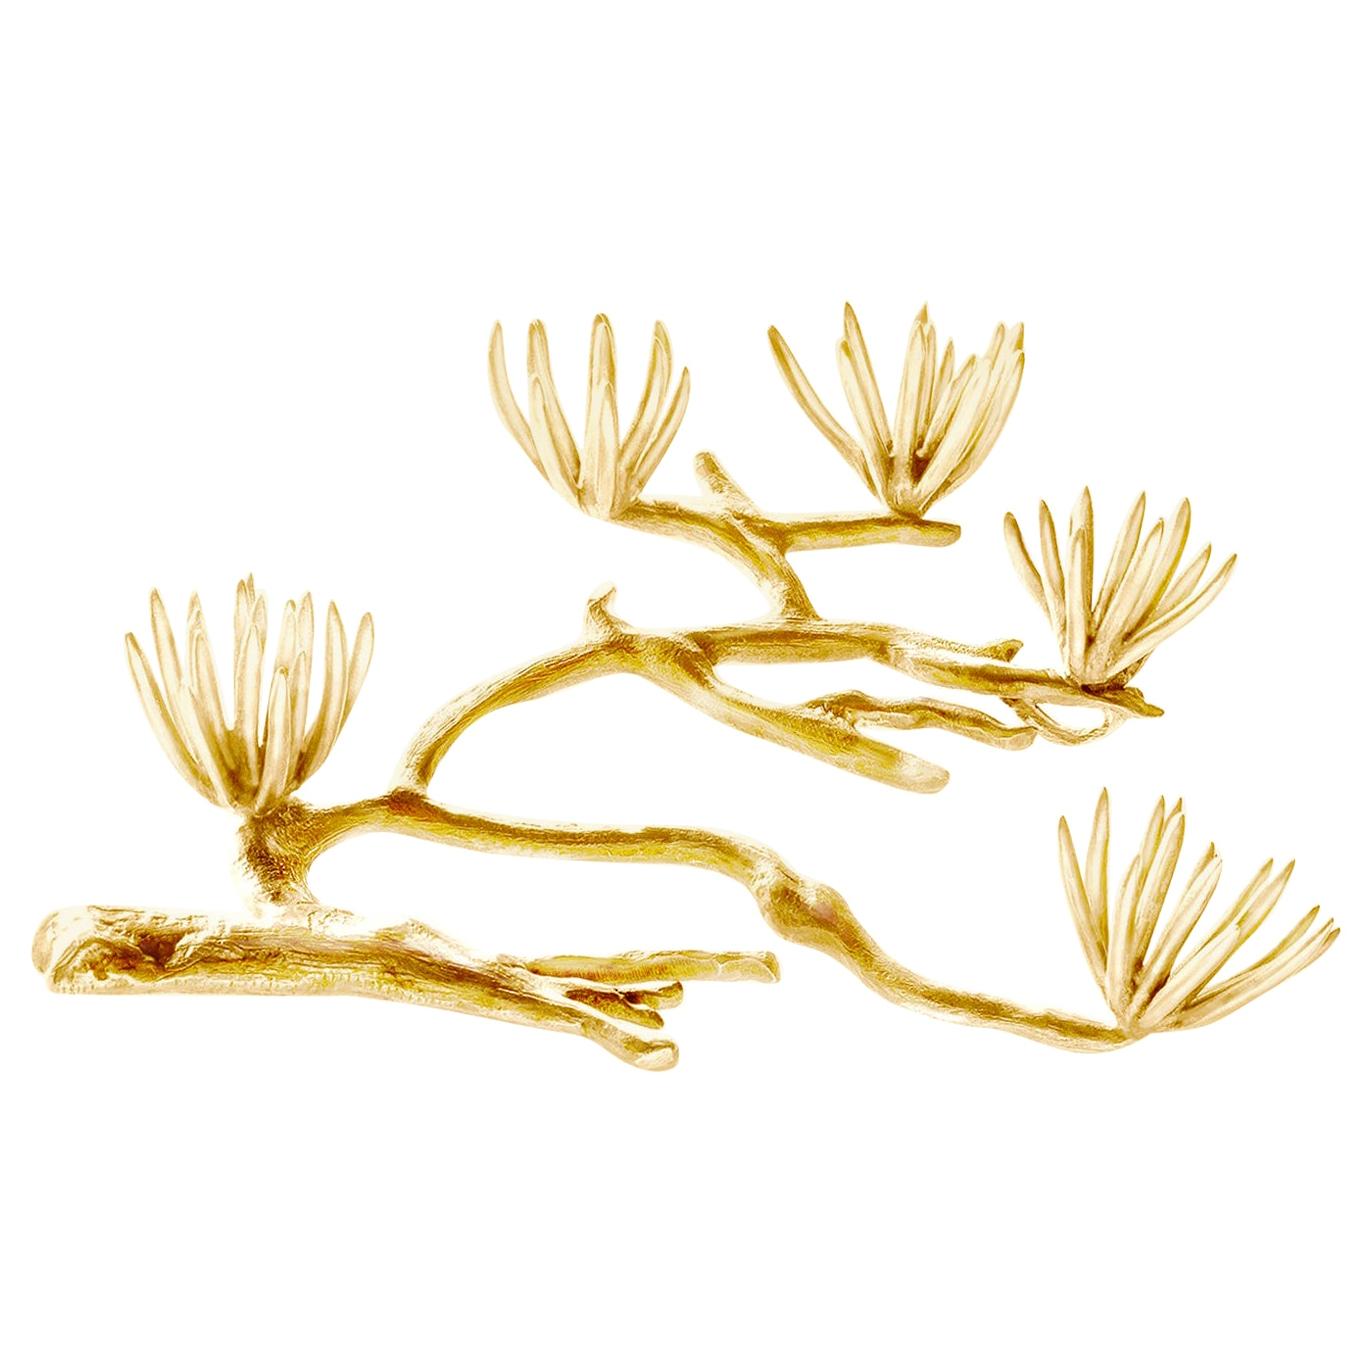 Featured in Vogue Eighteen Karat Yellow Gold Pine Brooch by the Artist